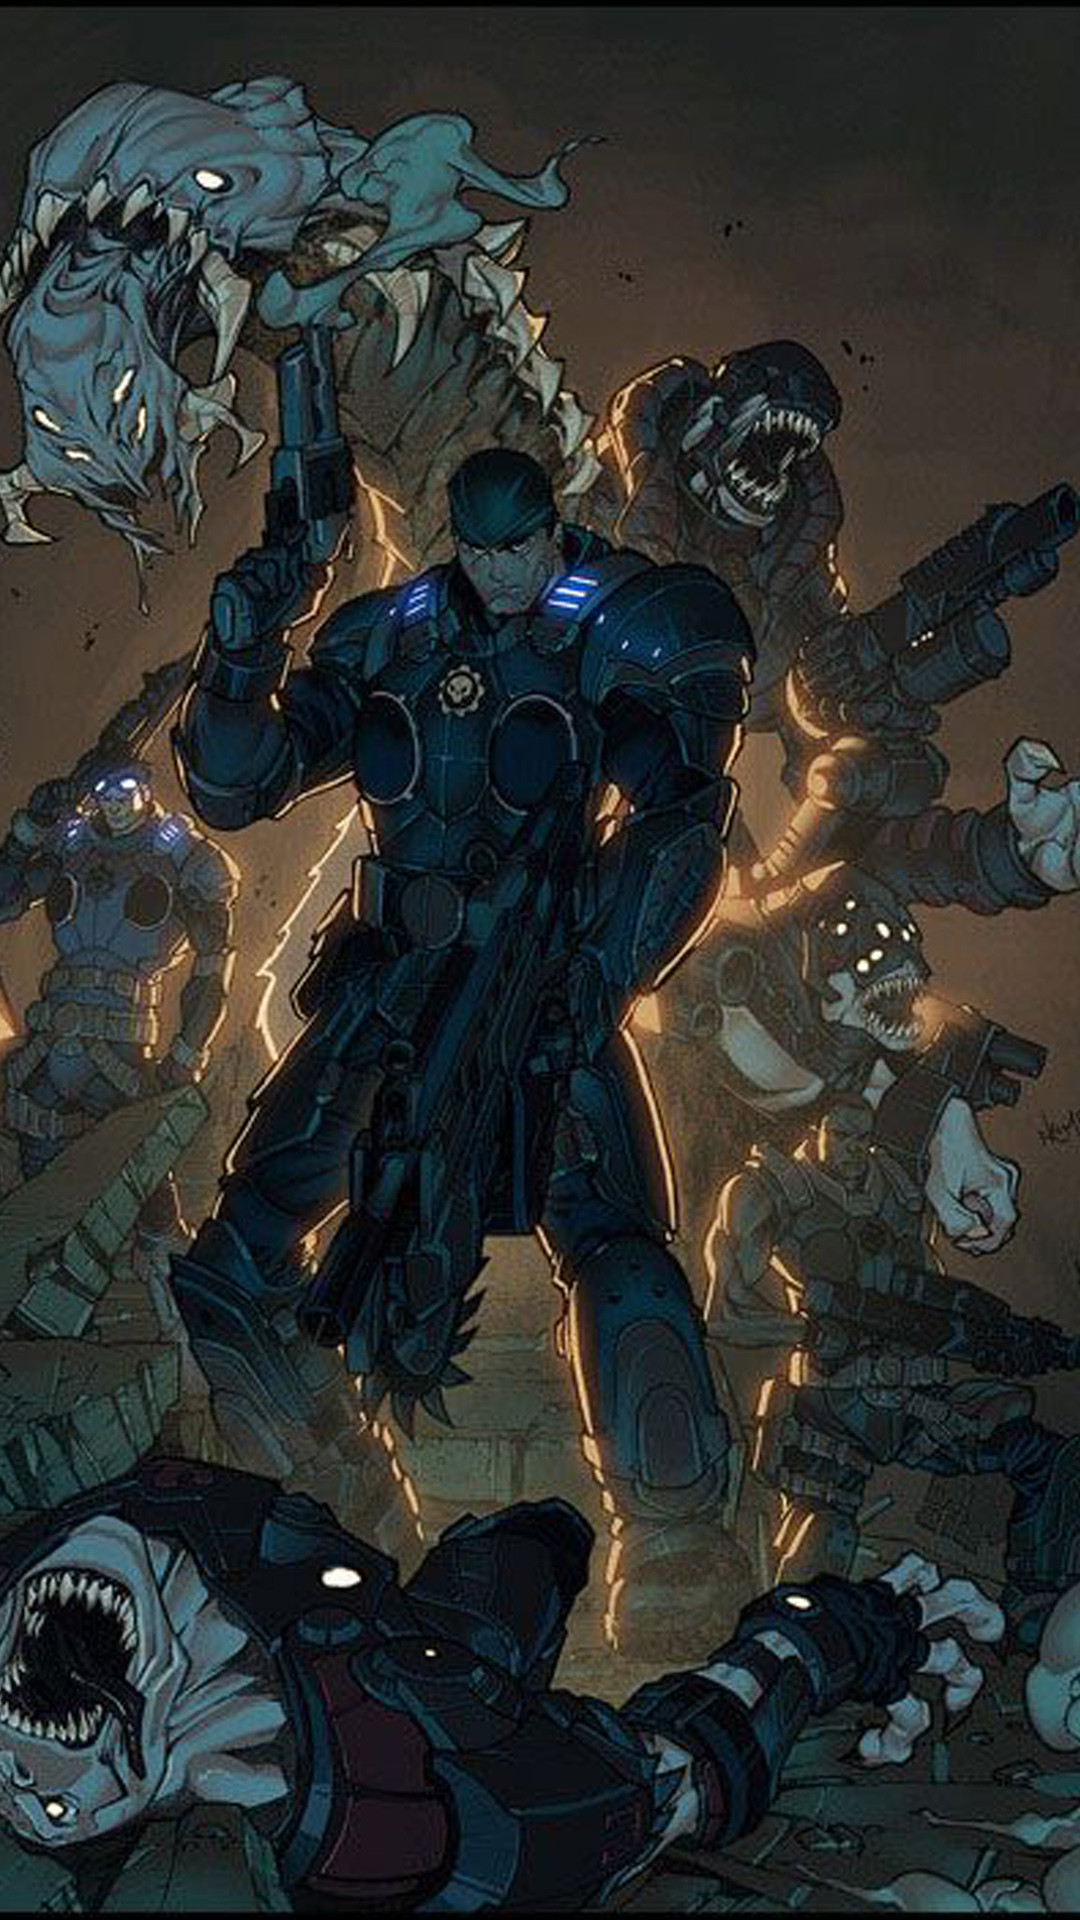 gears of war 4 wallpaper,action adventure game,fictional character,cg artwork,illustration,superhero